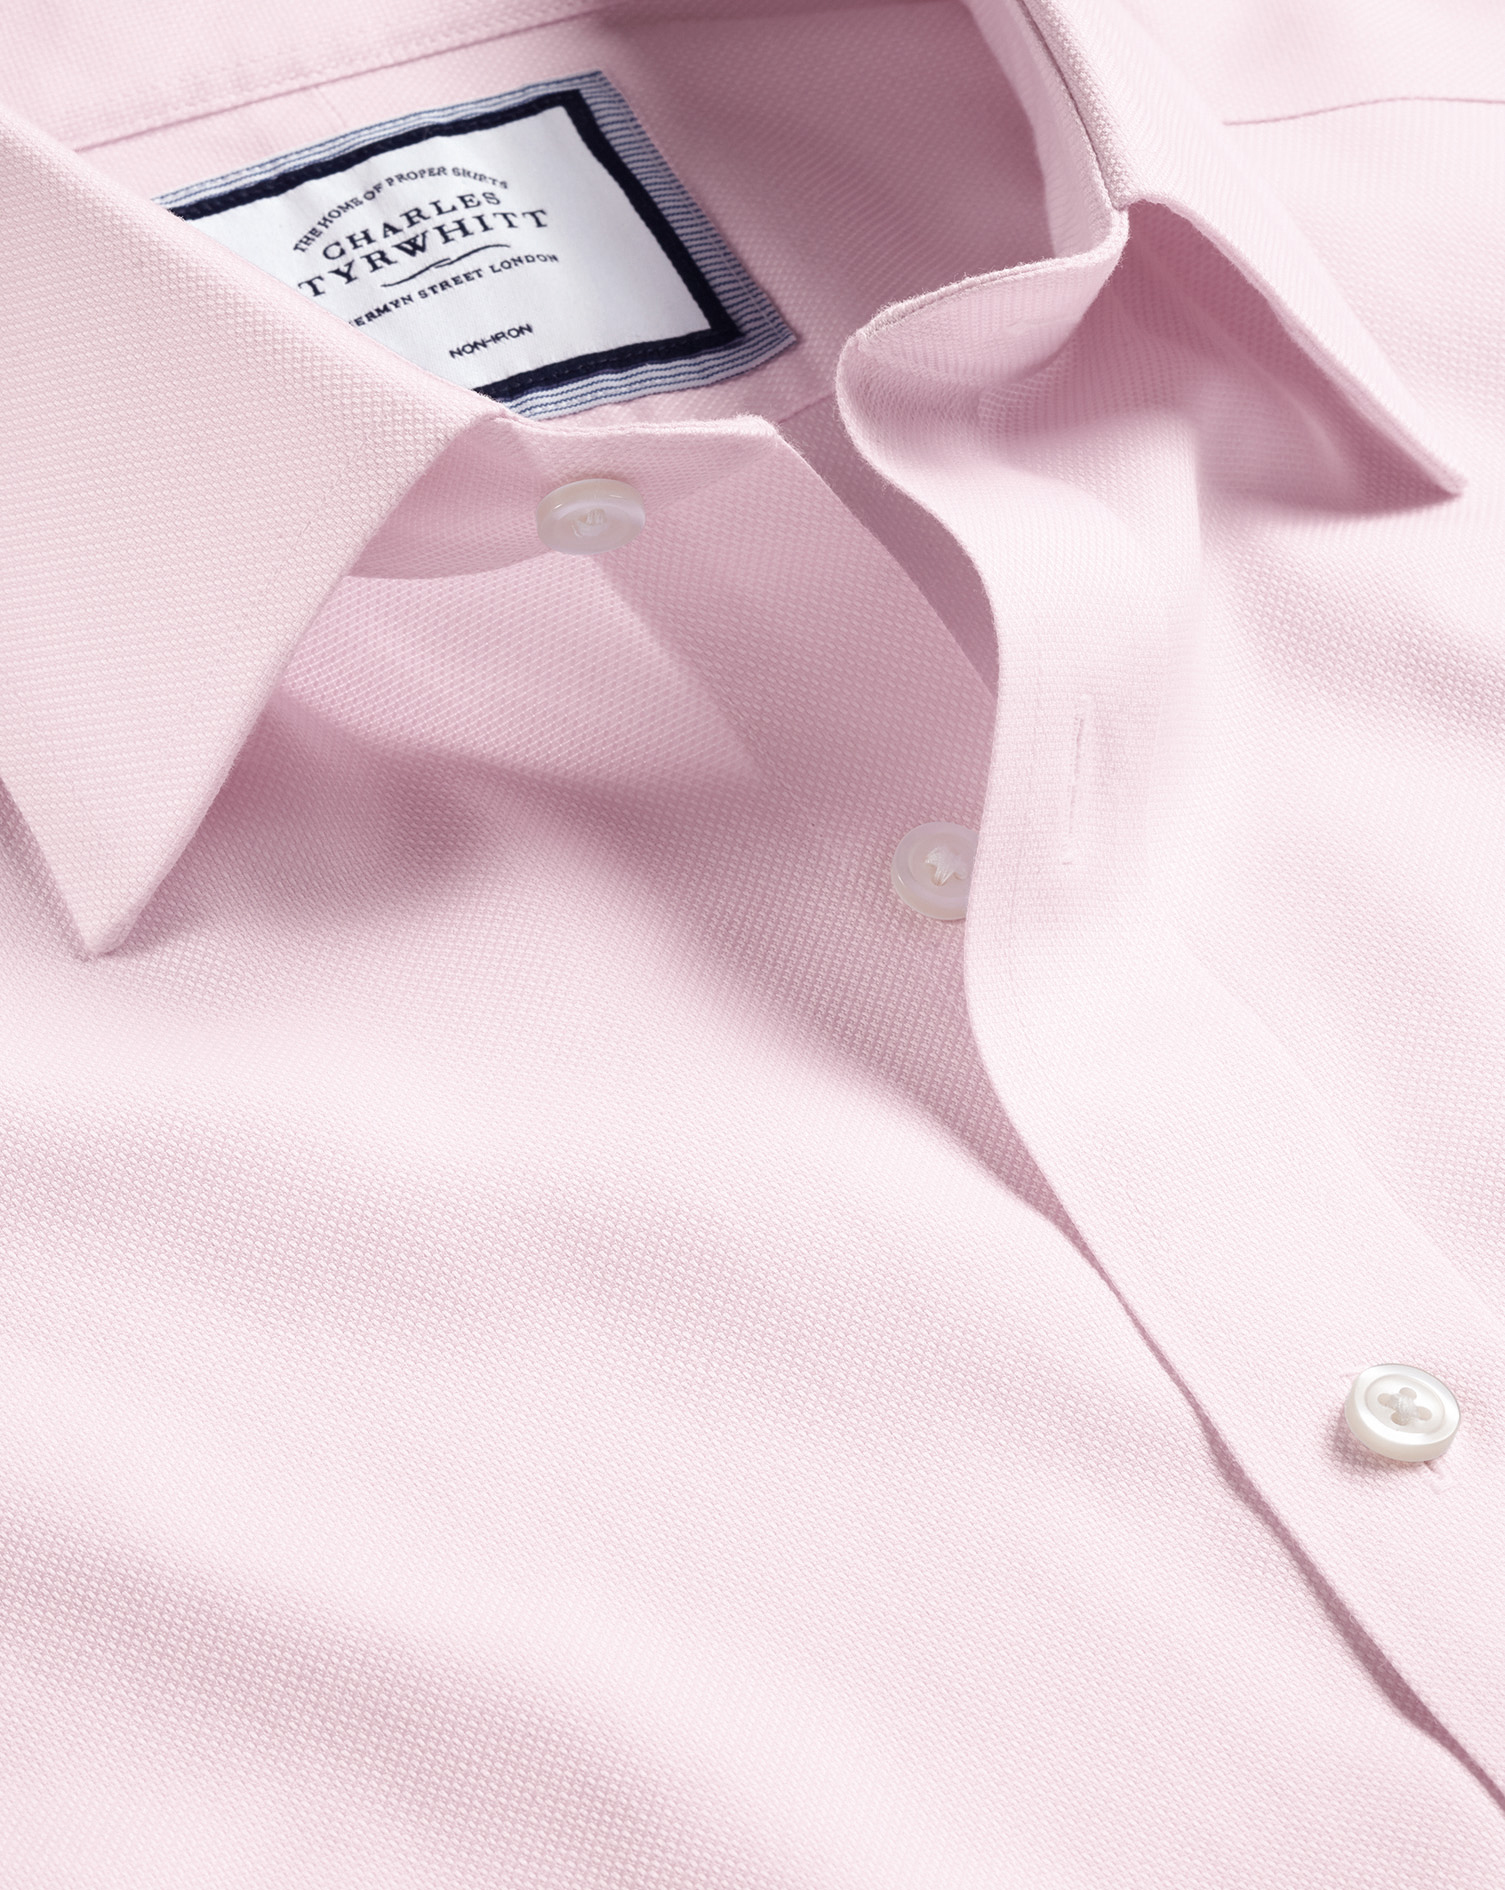 Men's Charles Tyrwhitt Non-Iron Royal Oxford Dress Shirt - Light Pink Single Cuff Size XL Cotton
